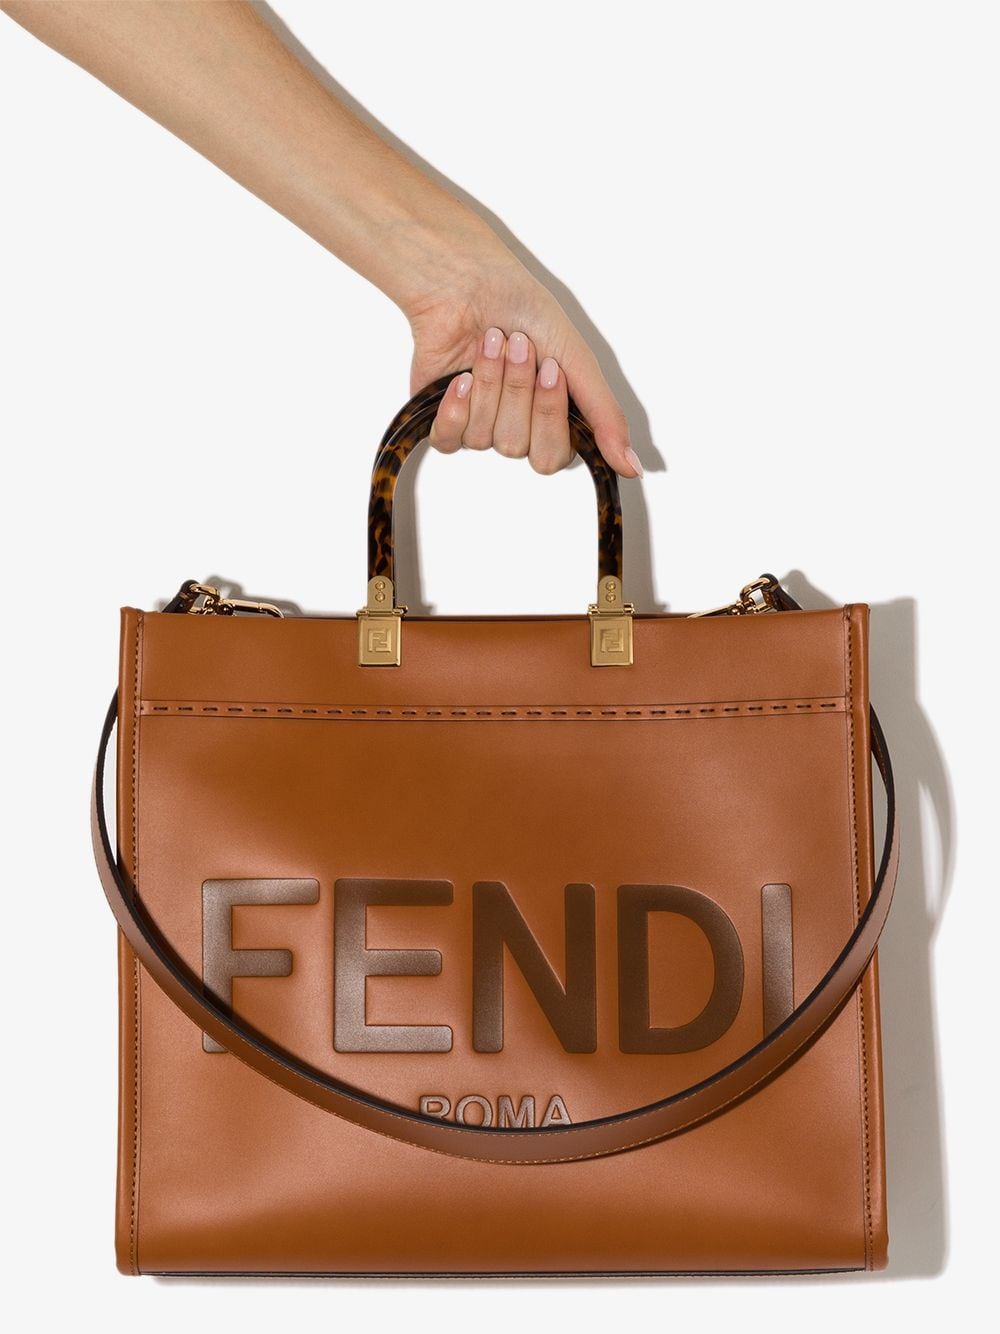 FENDI FENDI- Sunshine Medium Leather Tote